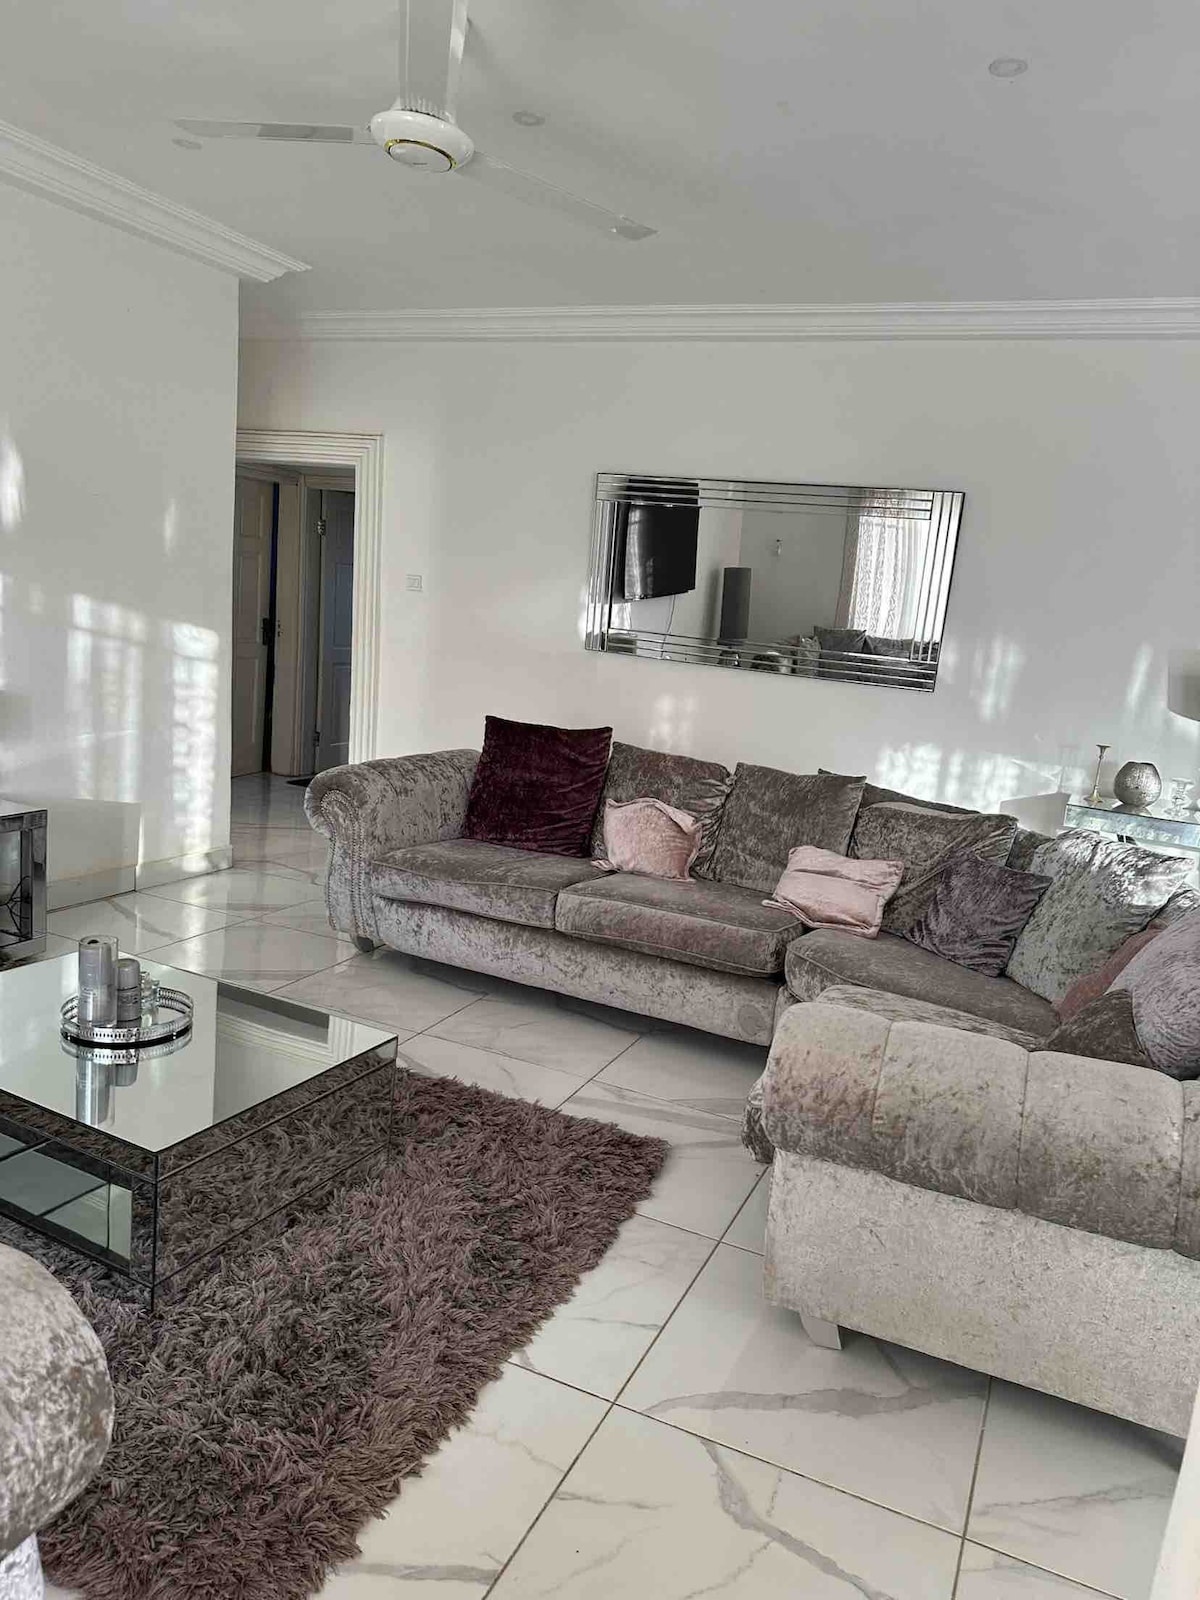 A spacious luxury 2 bedroom flat at KerrSerign